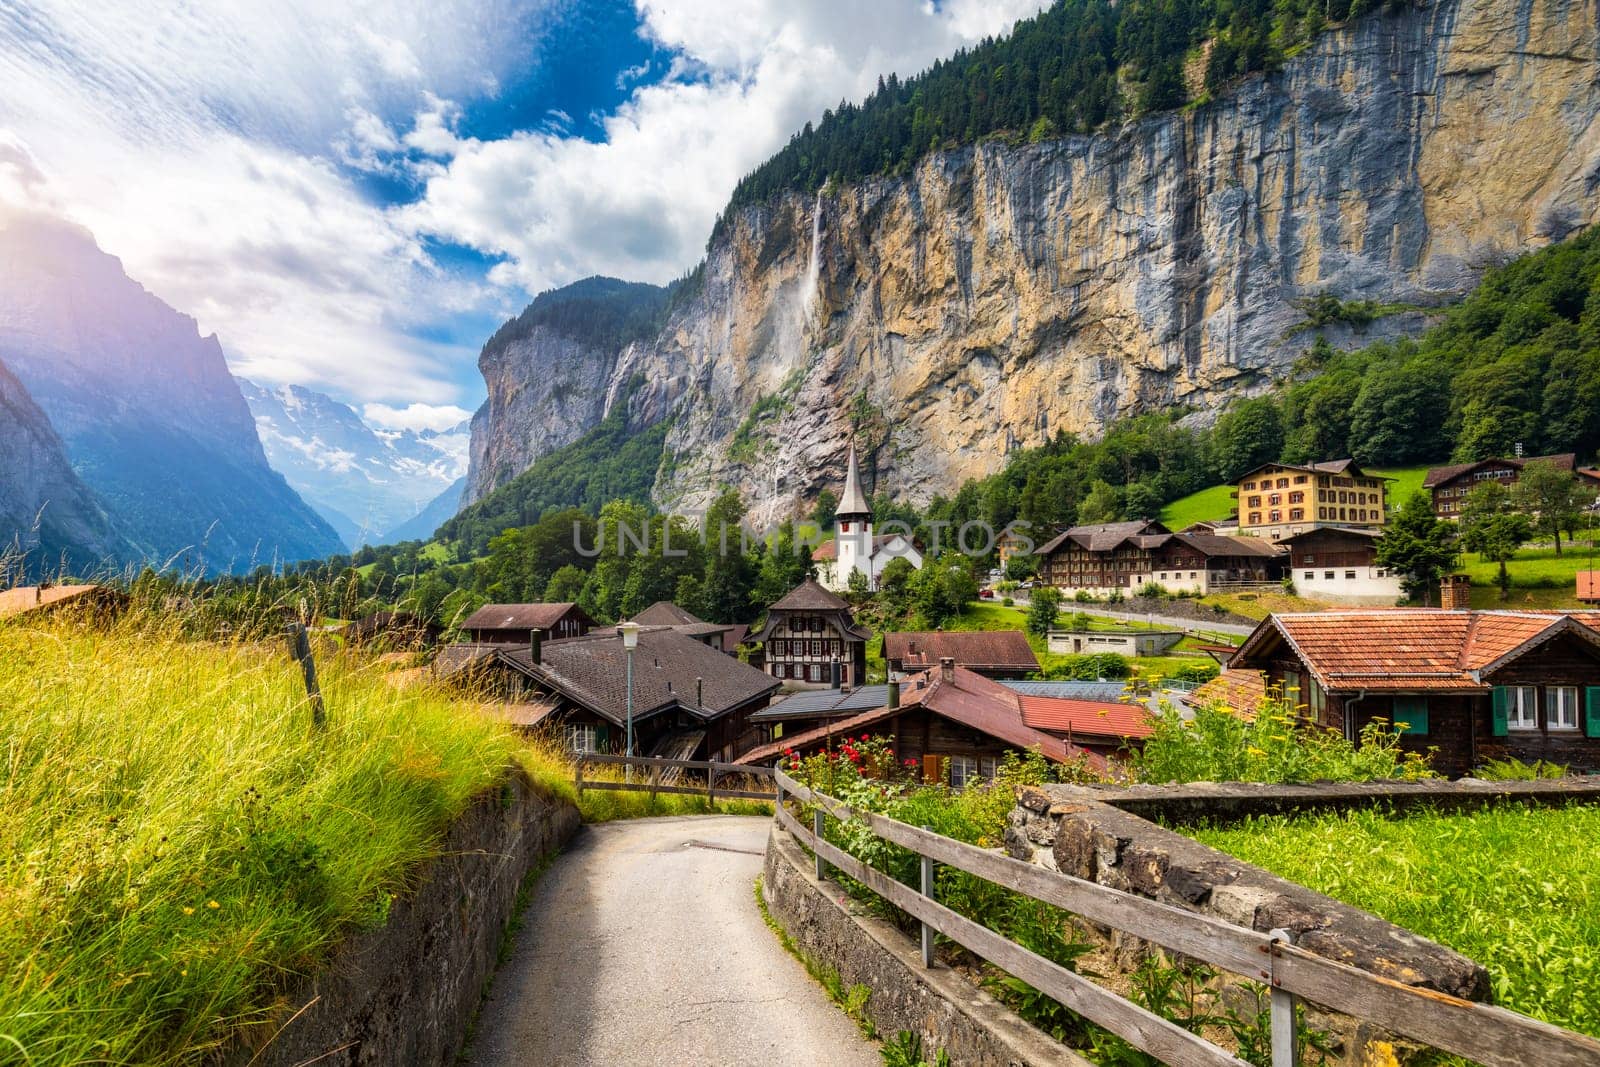 Amazing summer landscape of touristic alpine village Lauterbrunnen with famous church and Staubbach waterfall. Location: Lauterbrunnen village, Berner Oberland, Switzerland, Europe.